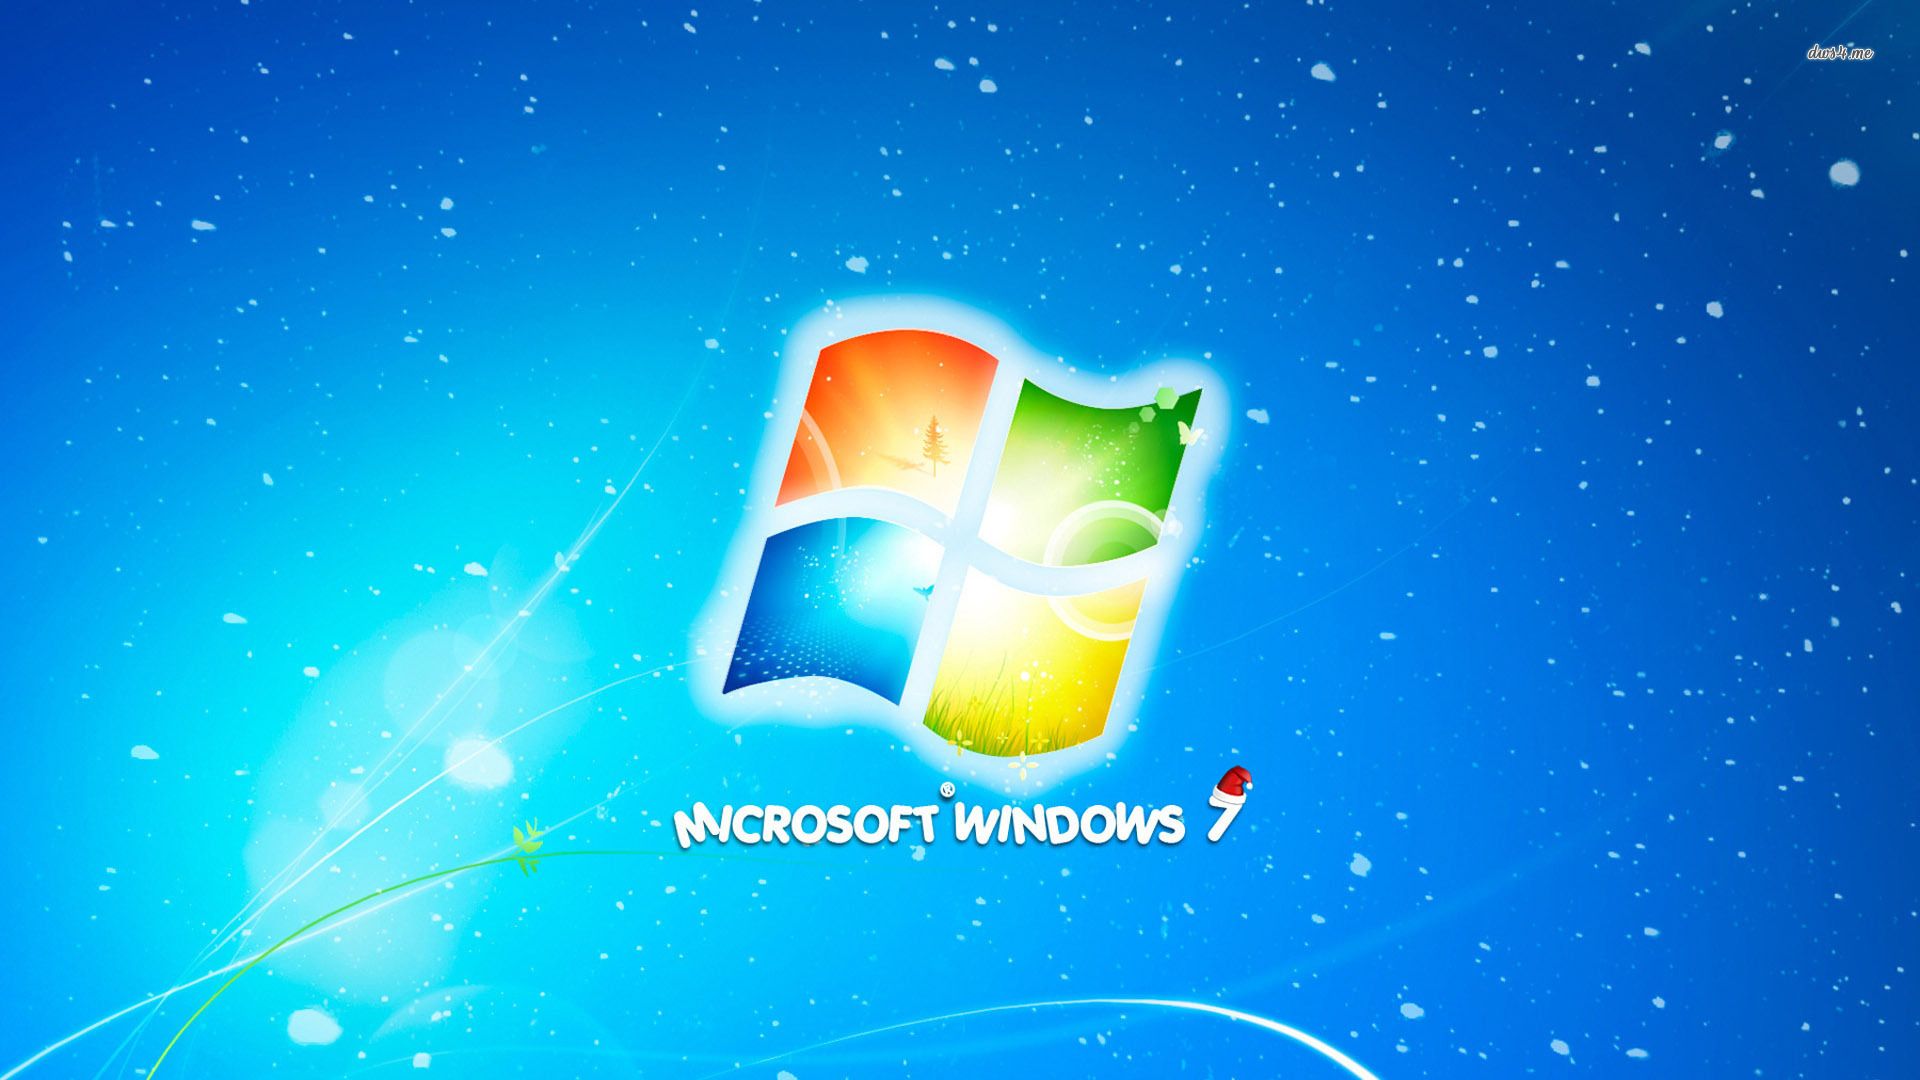 Microsoft Windows 7 Merry Christmas wallpaper - Computer ...